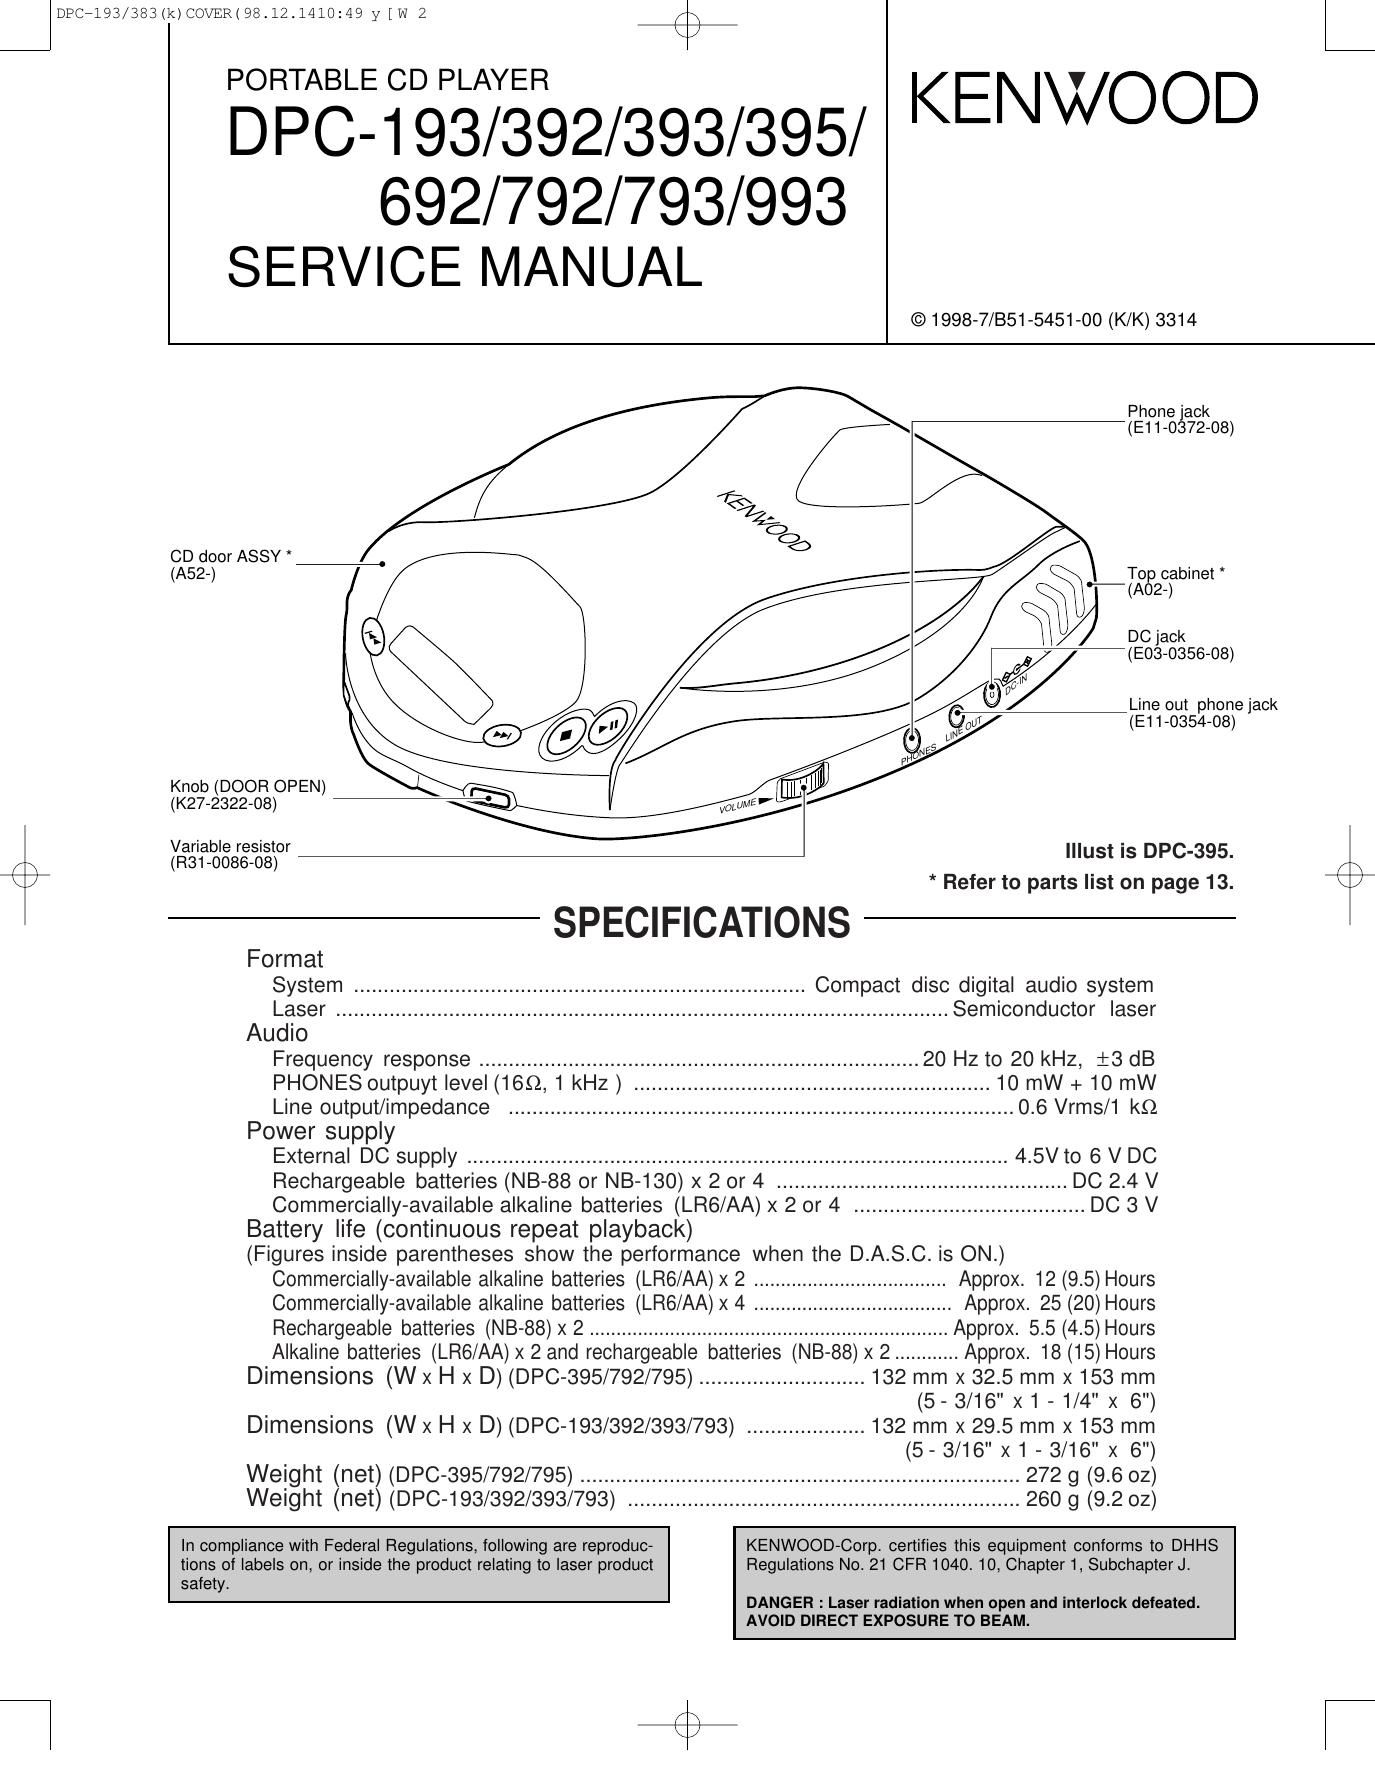 Kenwood DPC 792 Service Manual